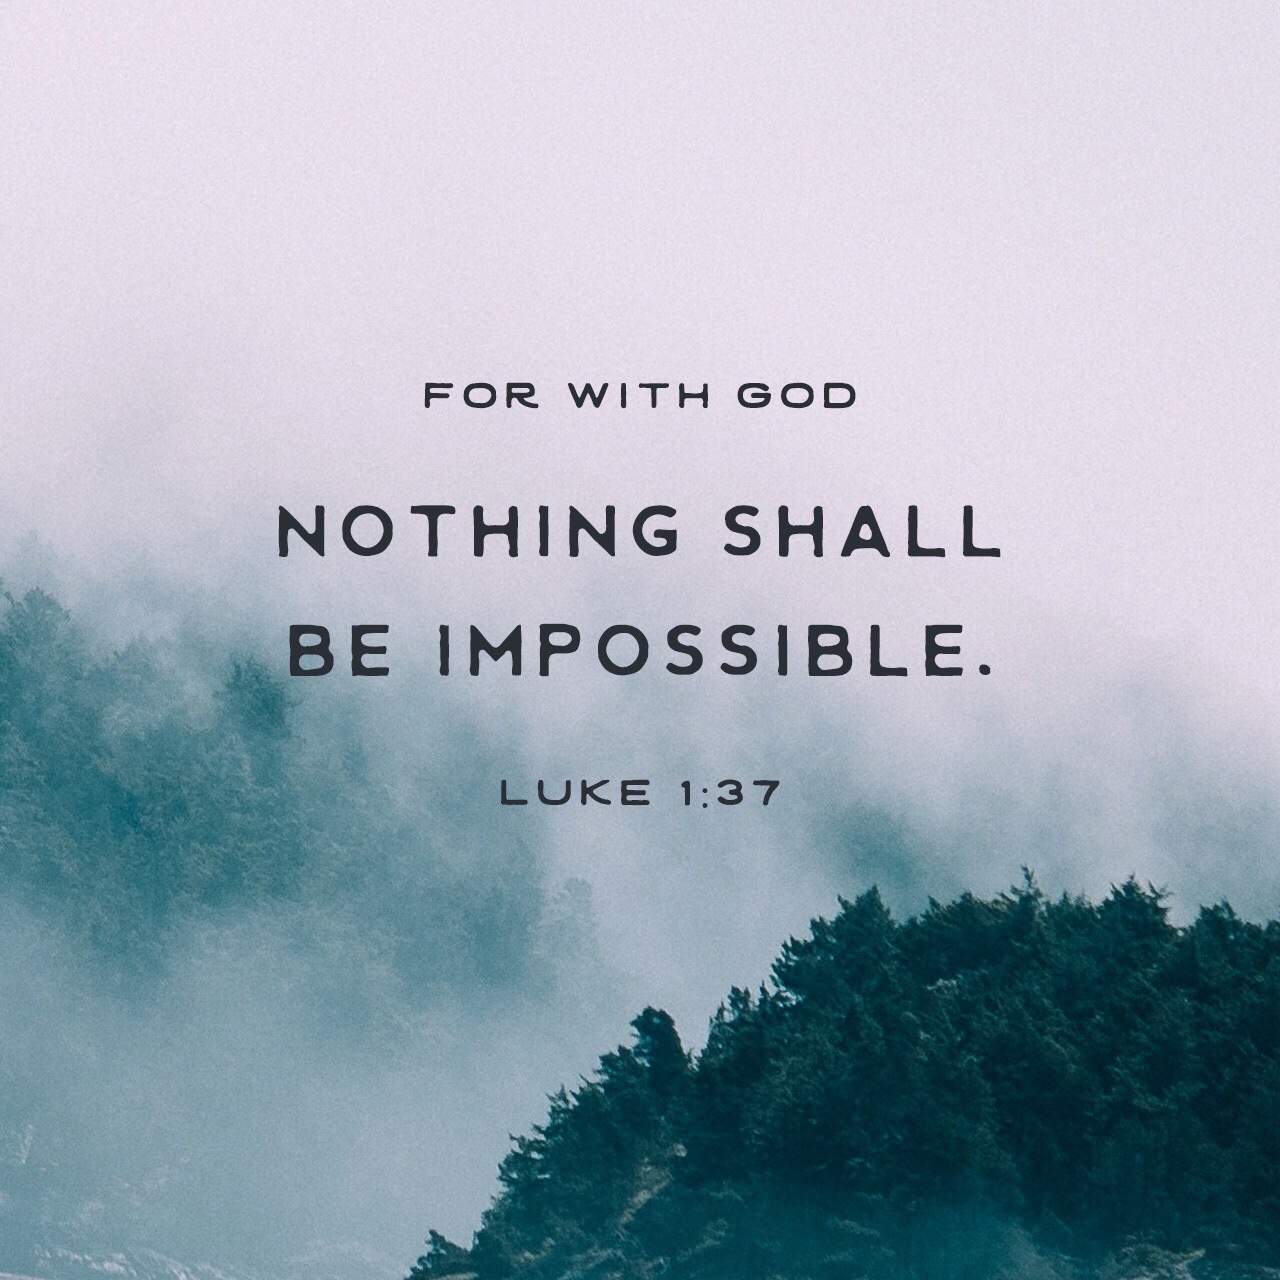 VOTD November 20 - “For nothing will be impossible with God.” ‭‭Luke‬ ‭1:37‬ ‭NASB‬‬